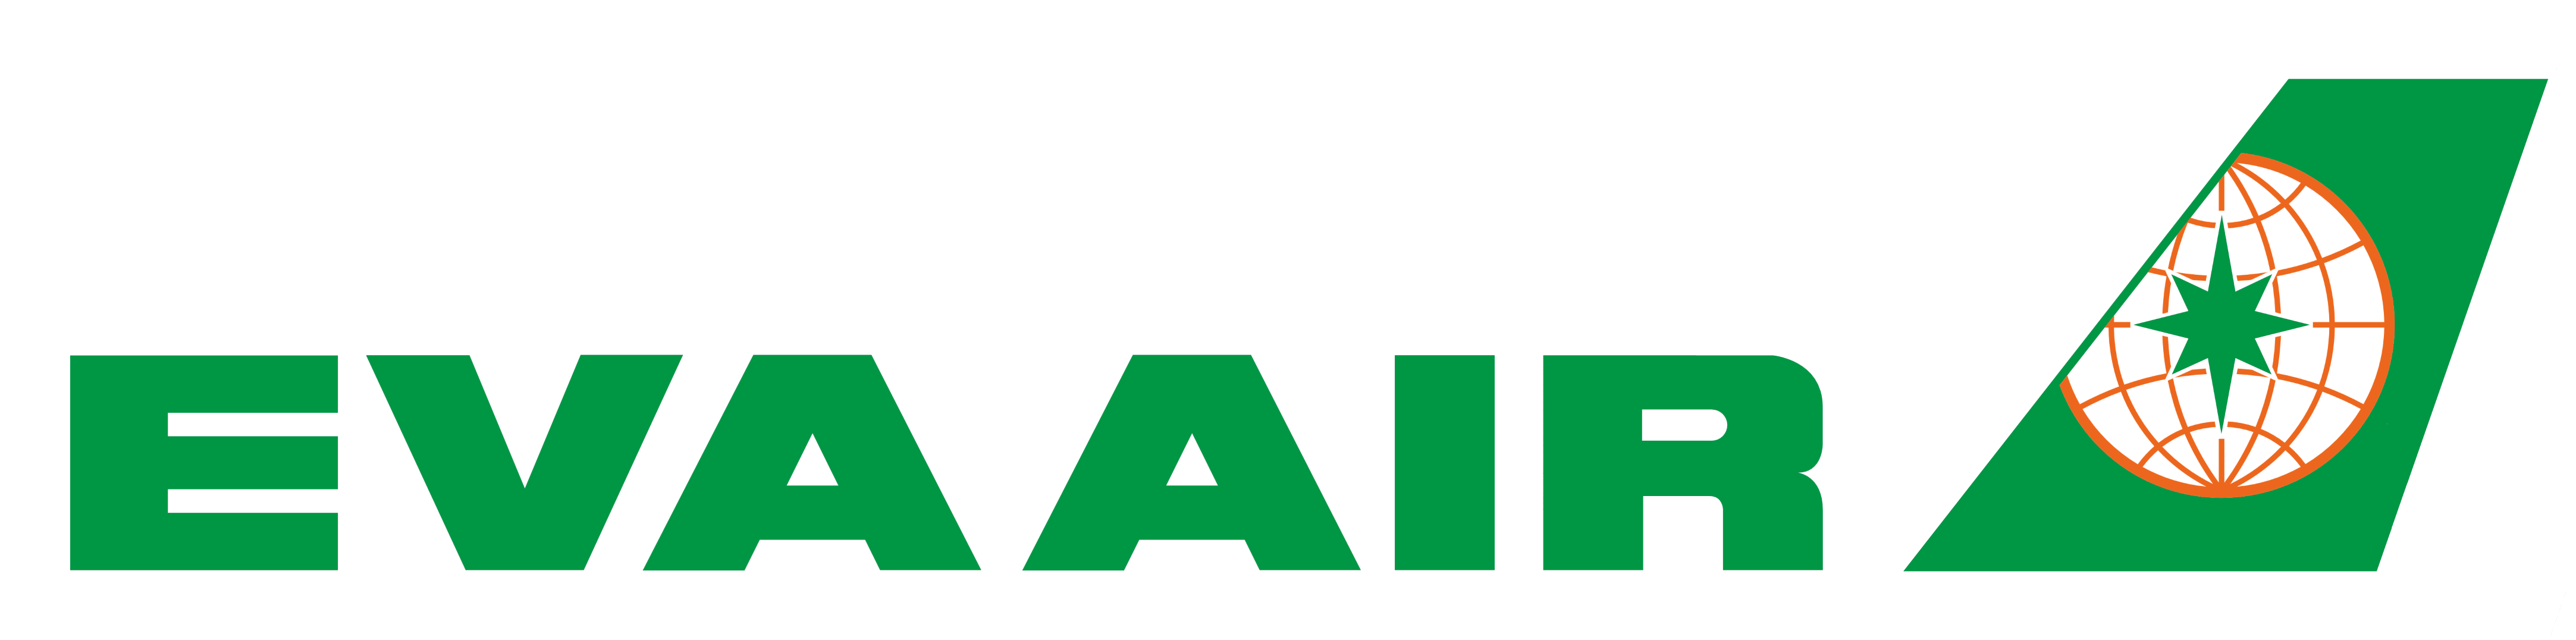 Green Airline Logo - EVA Air Cargo | Port of Seattle